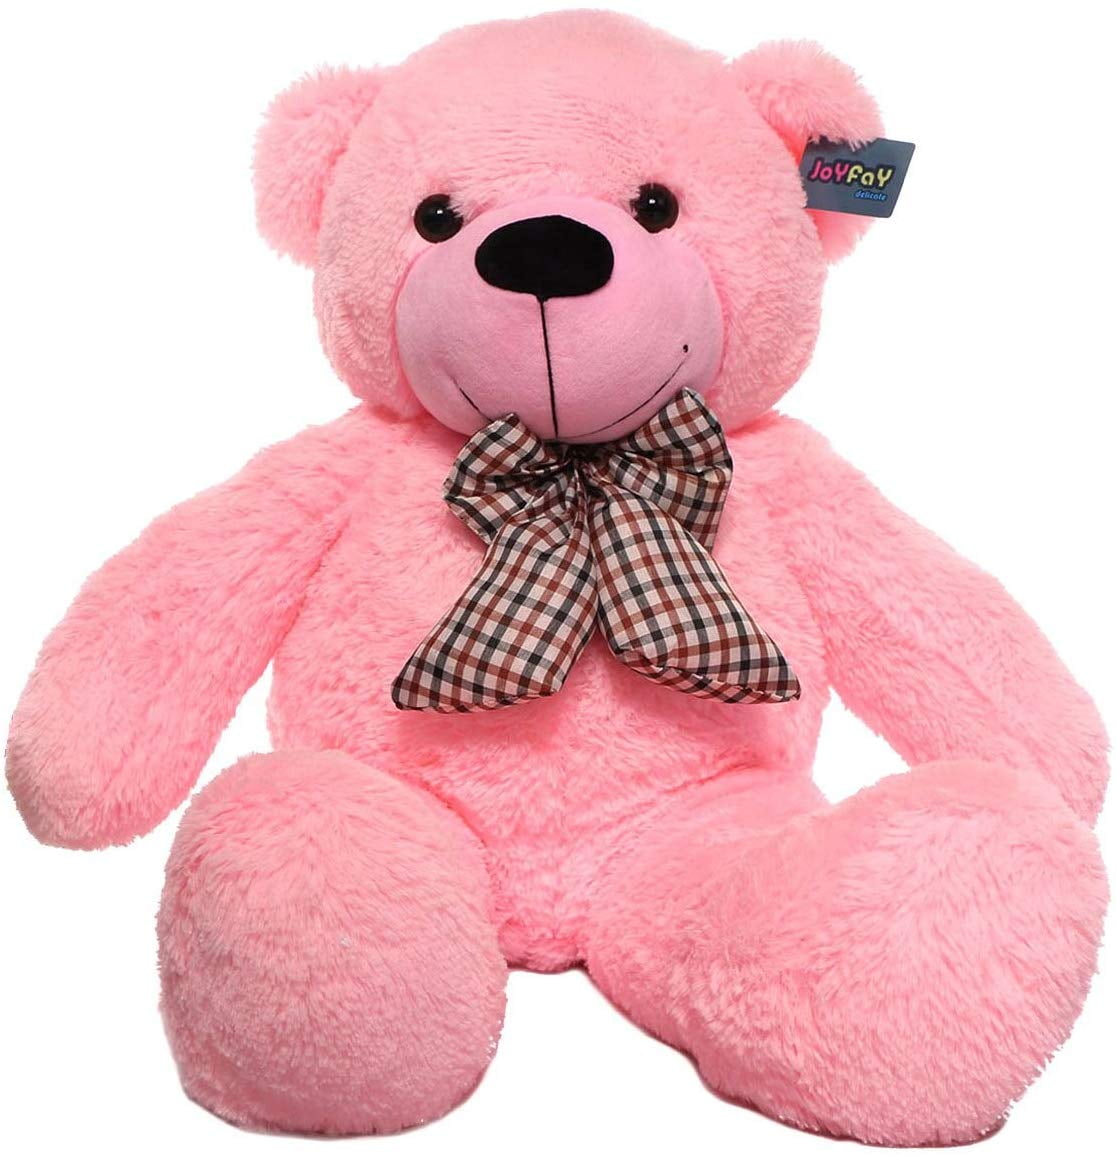 Giant Teddy Bear Purple Huge Plush Stuffed Animal Toys 47" Valentine Girls Gift 